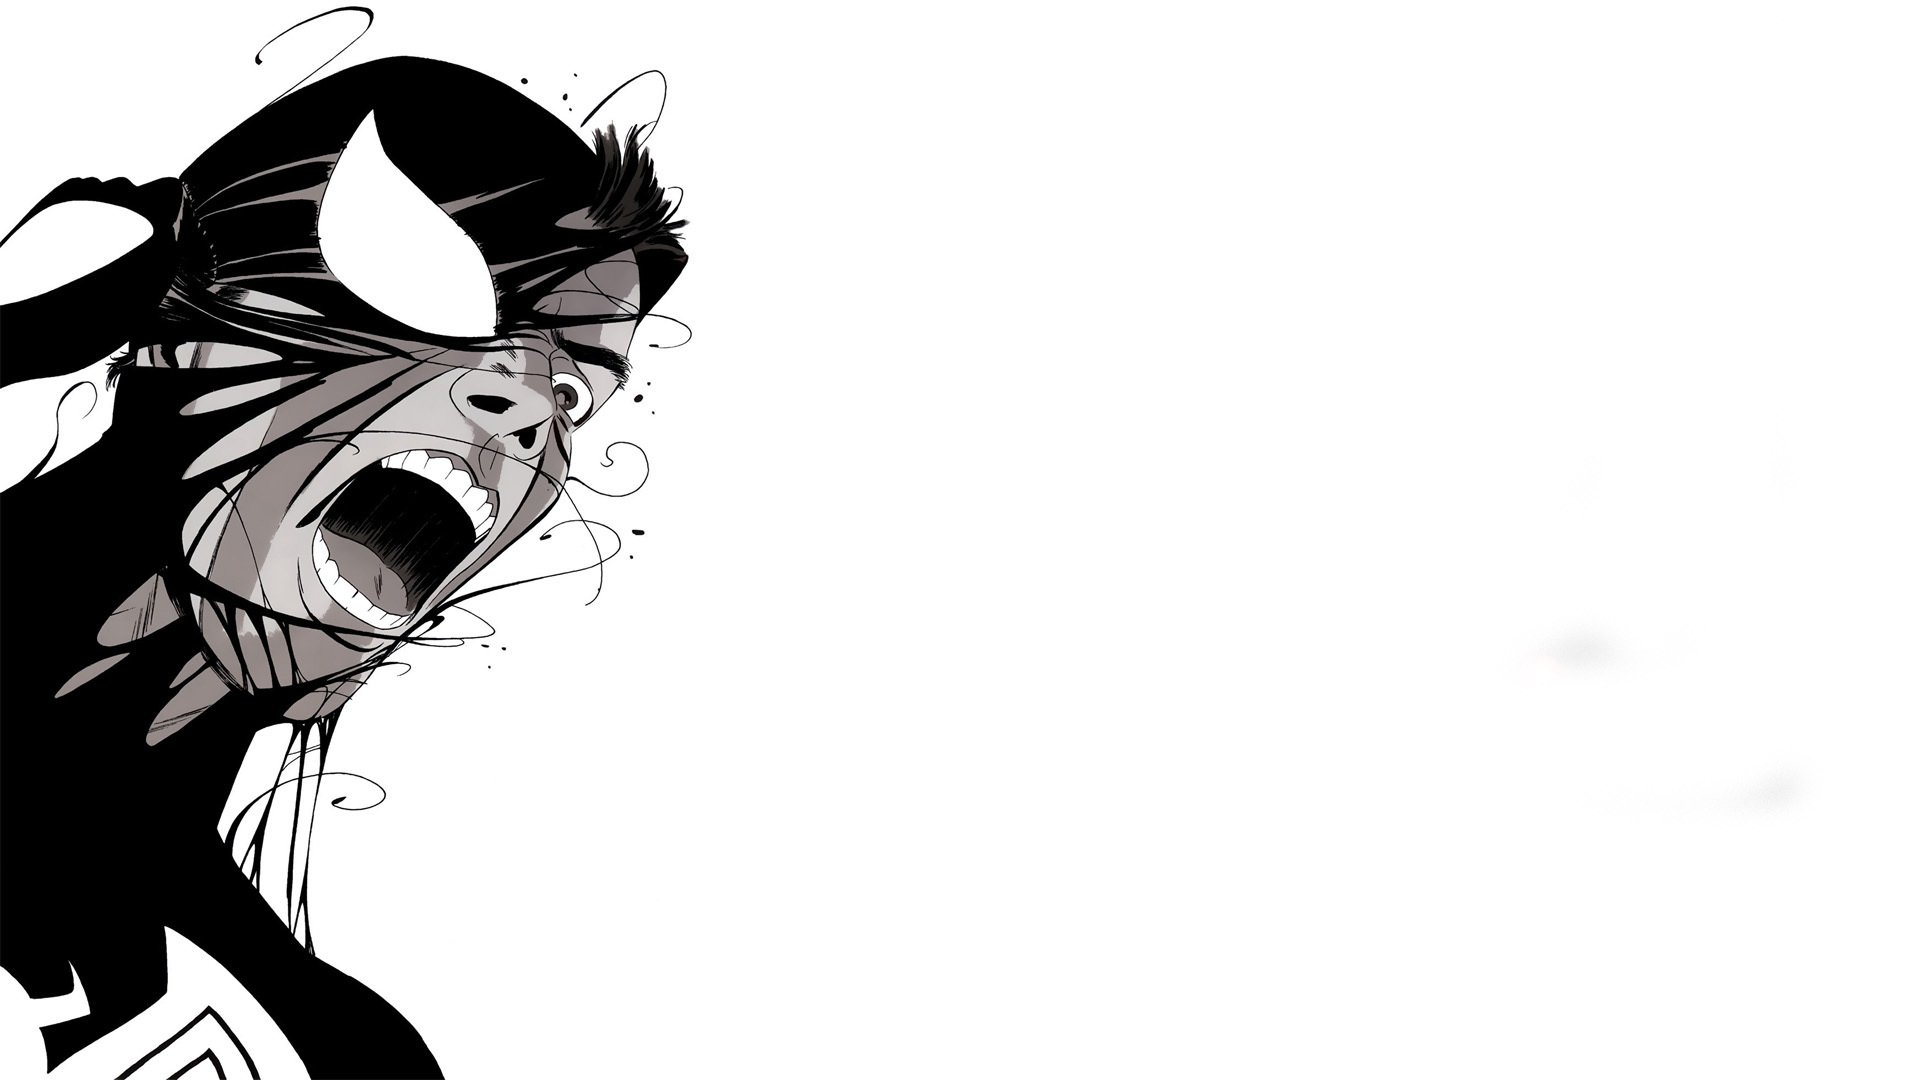 Download Wallpaper Face, White Background, Black And White, Comic, Marvel Comics, Spider Man, Venom, Venom, Peter Parker, Peter Parker, Spider Man, Marvel, Symbiote, Symbiote, Section Fantasy In Resolution 1920x1080